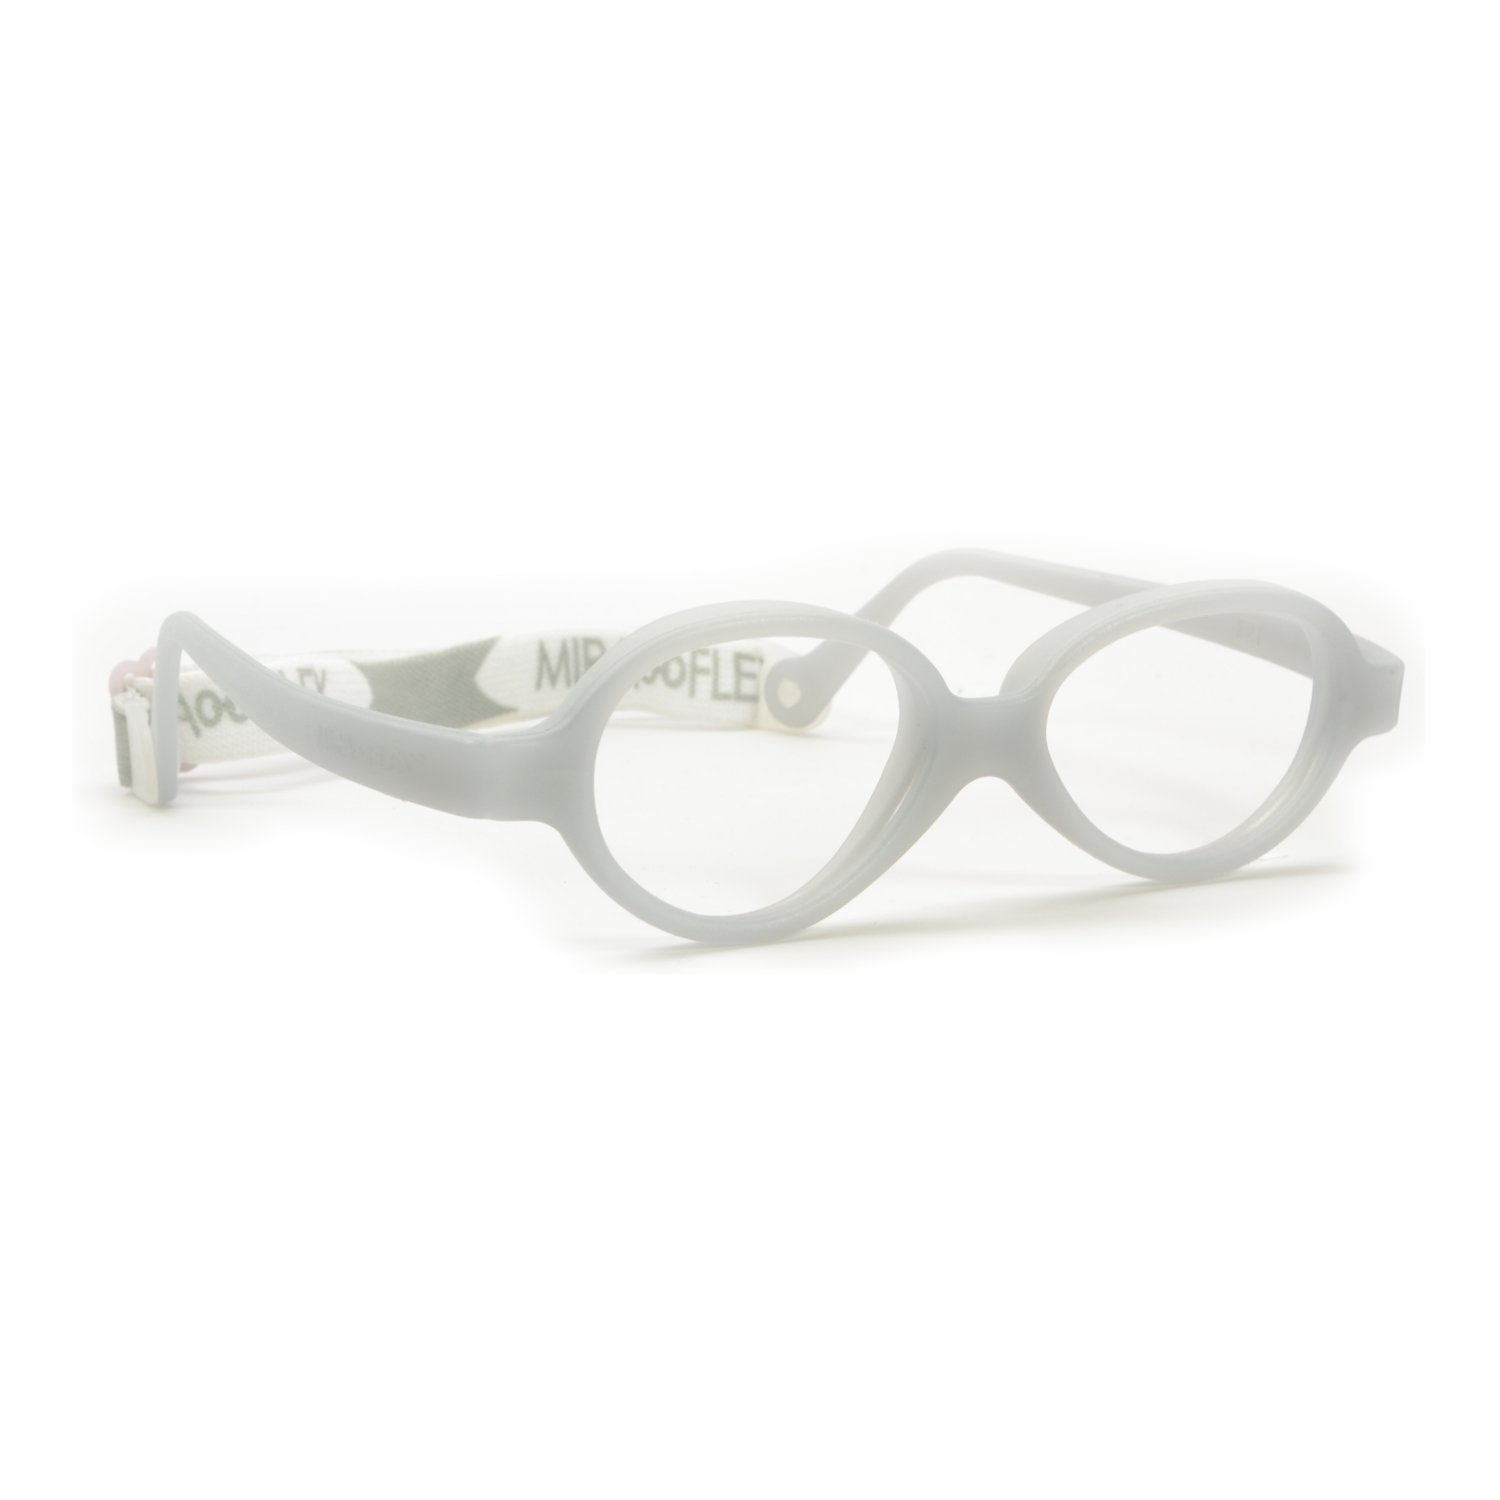 Miraflex Flexible and Safe Eyeglasses Baby One 44